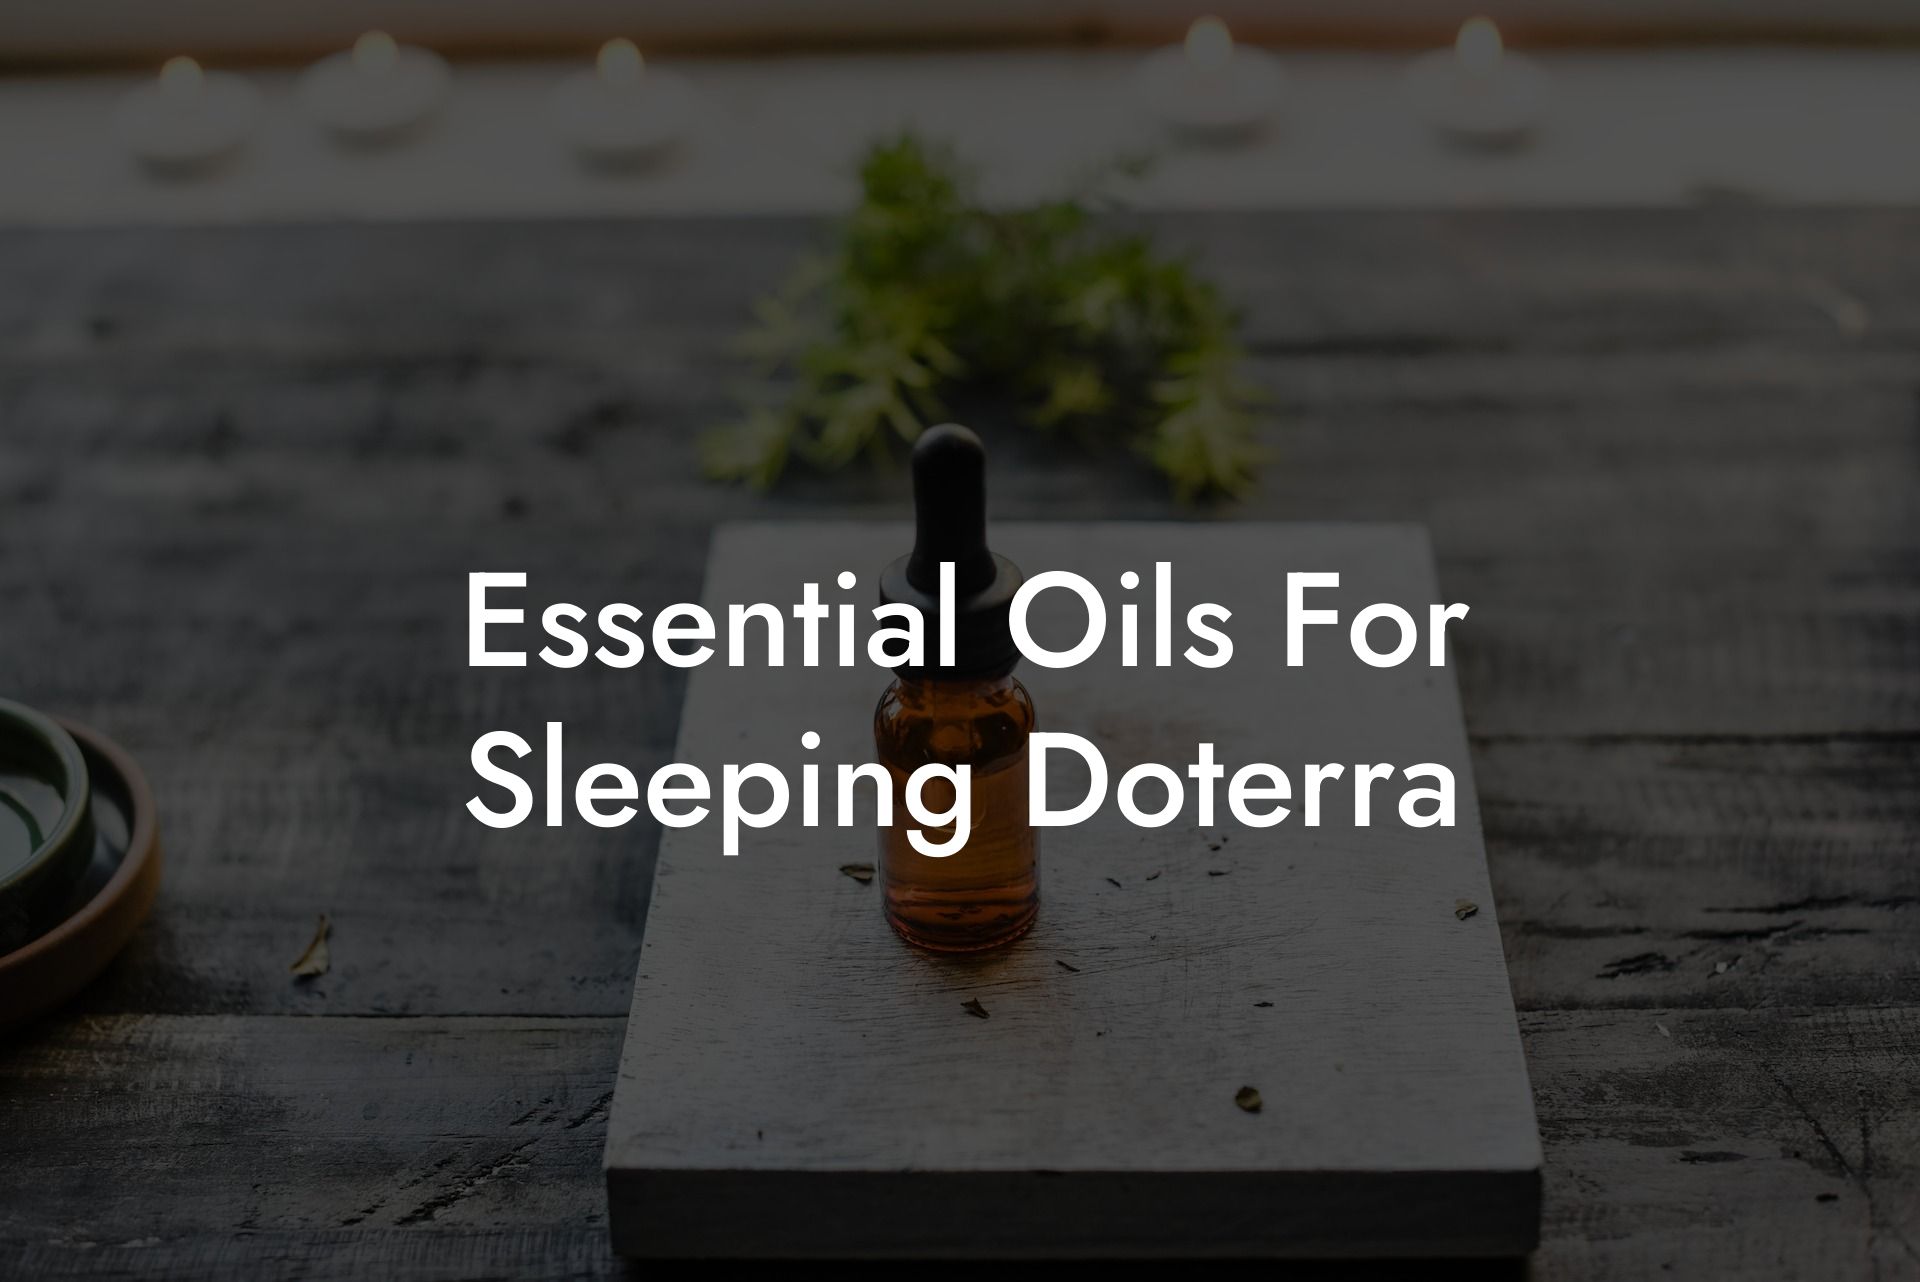 Essential Oils For Sleeping Doterra